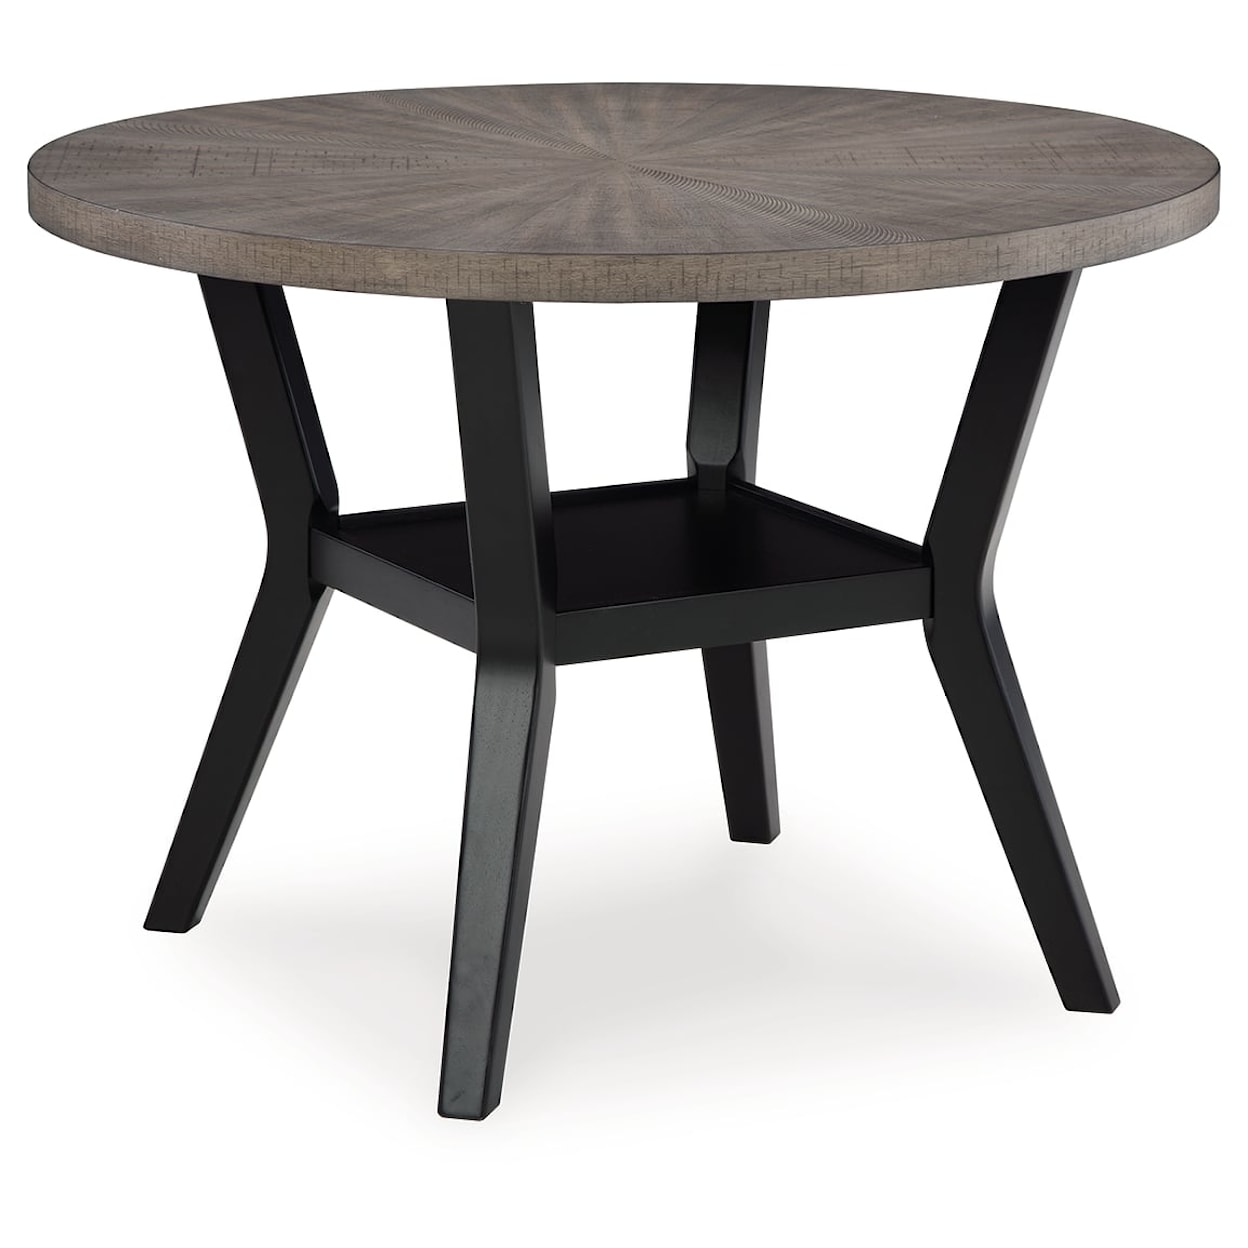 Signature Design by Ashley Furniture Corloda Round Table Set